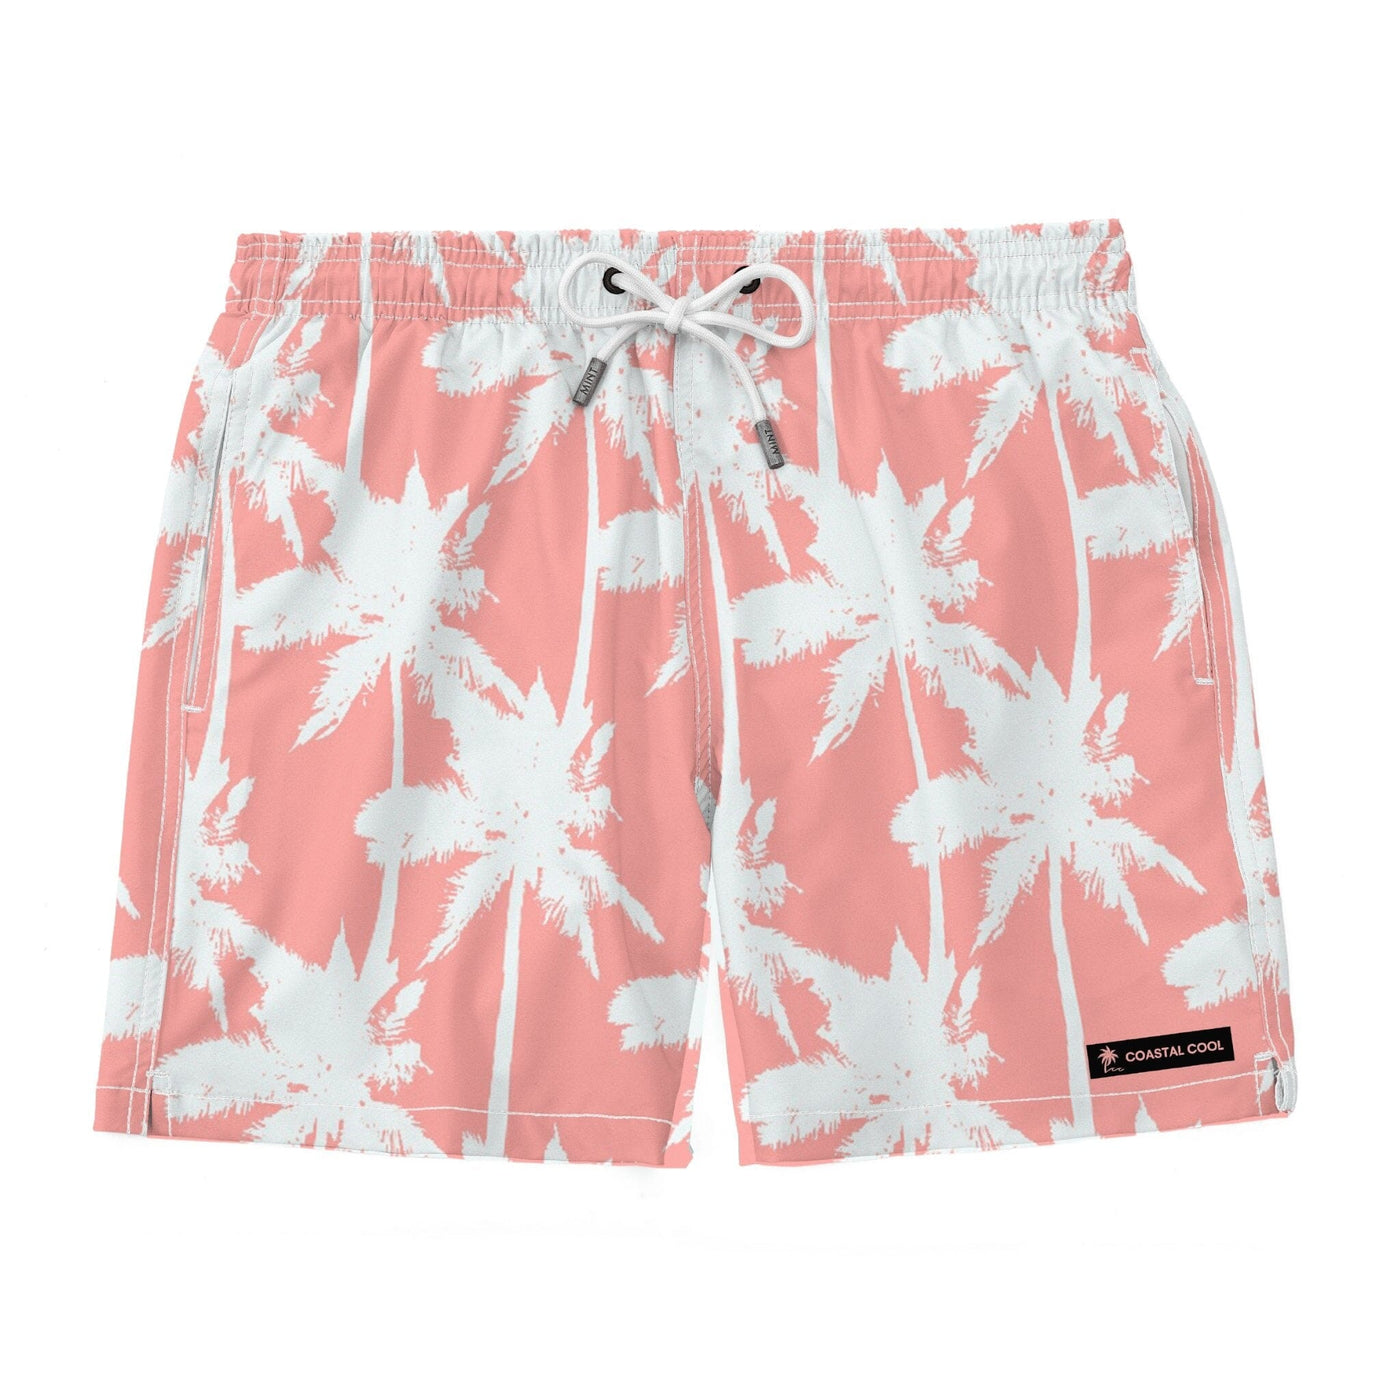 The Groove Pink Swim Trunks - Coastal Cool - Swimwear and Beachwear - Recycled fabrics